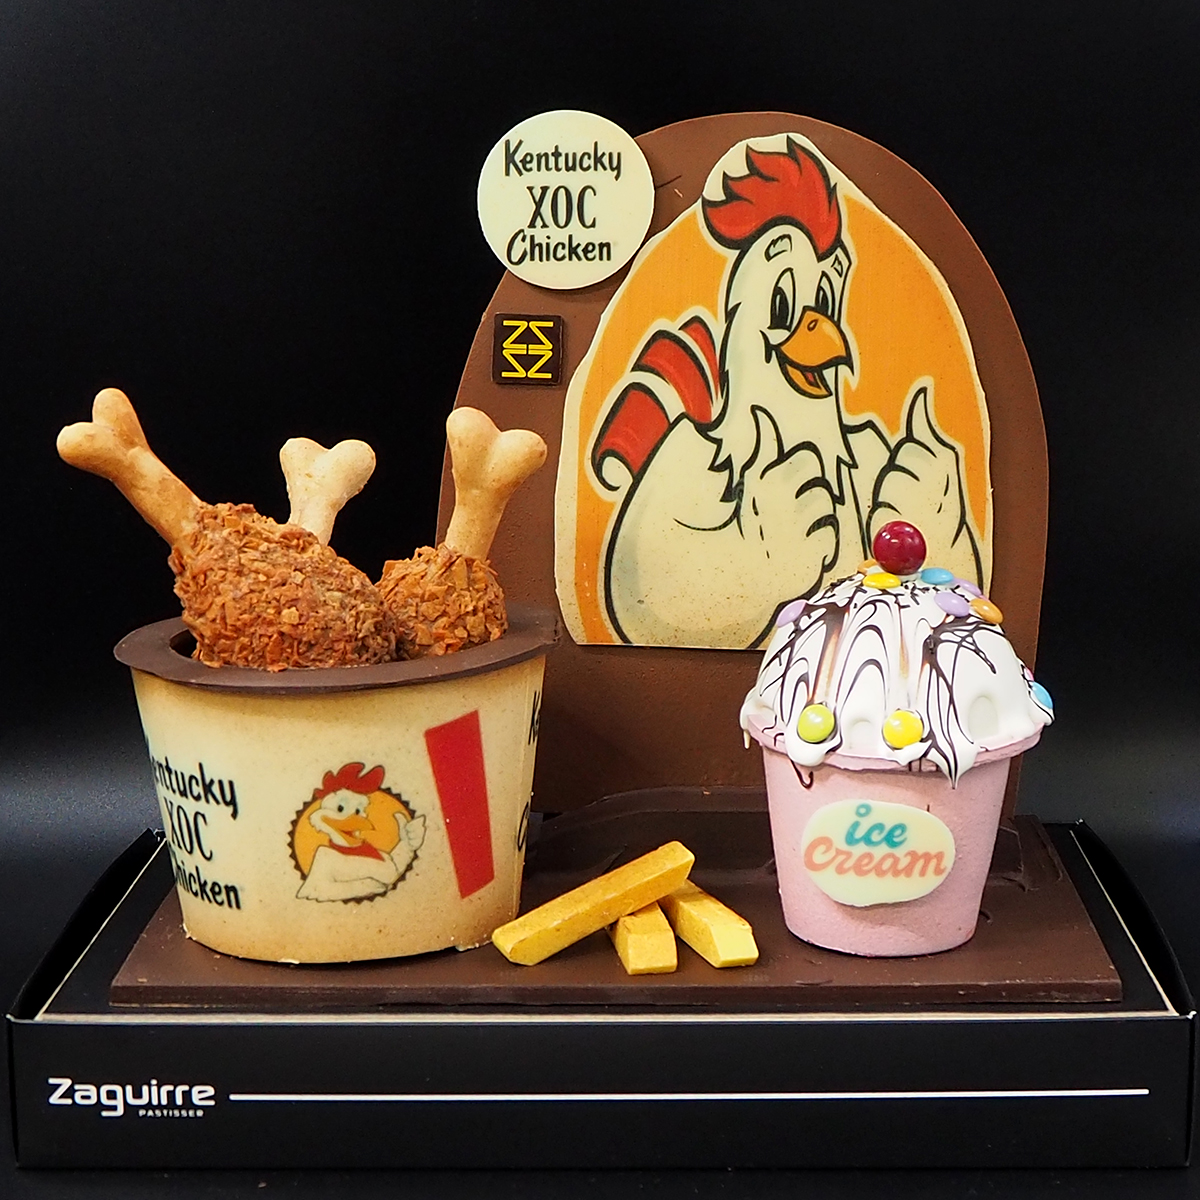 Mona de xocolata Kentucky Xoc Chicken elaborada artesanalment per Zaguirre Pastisser